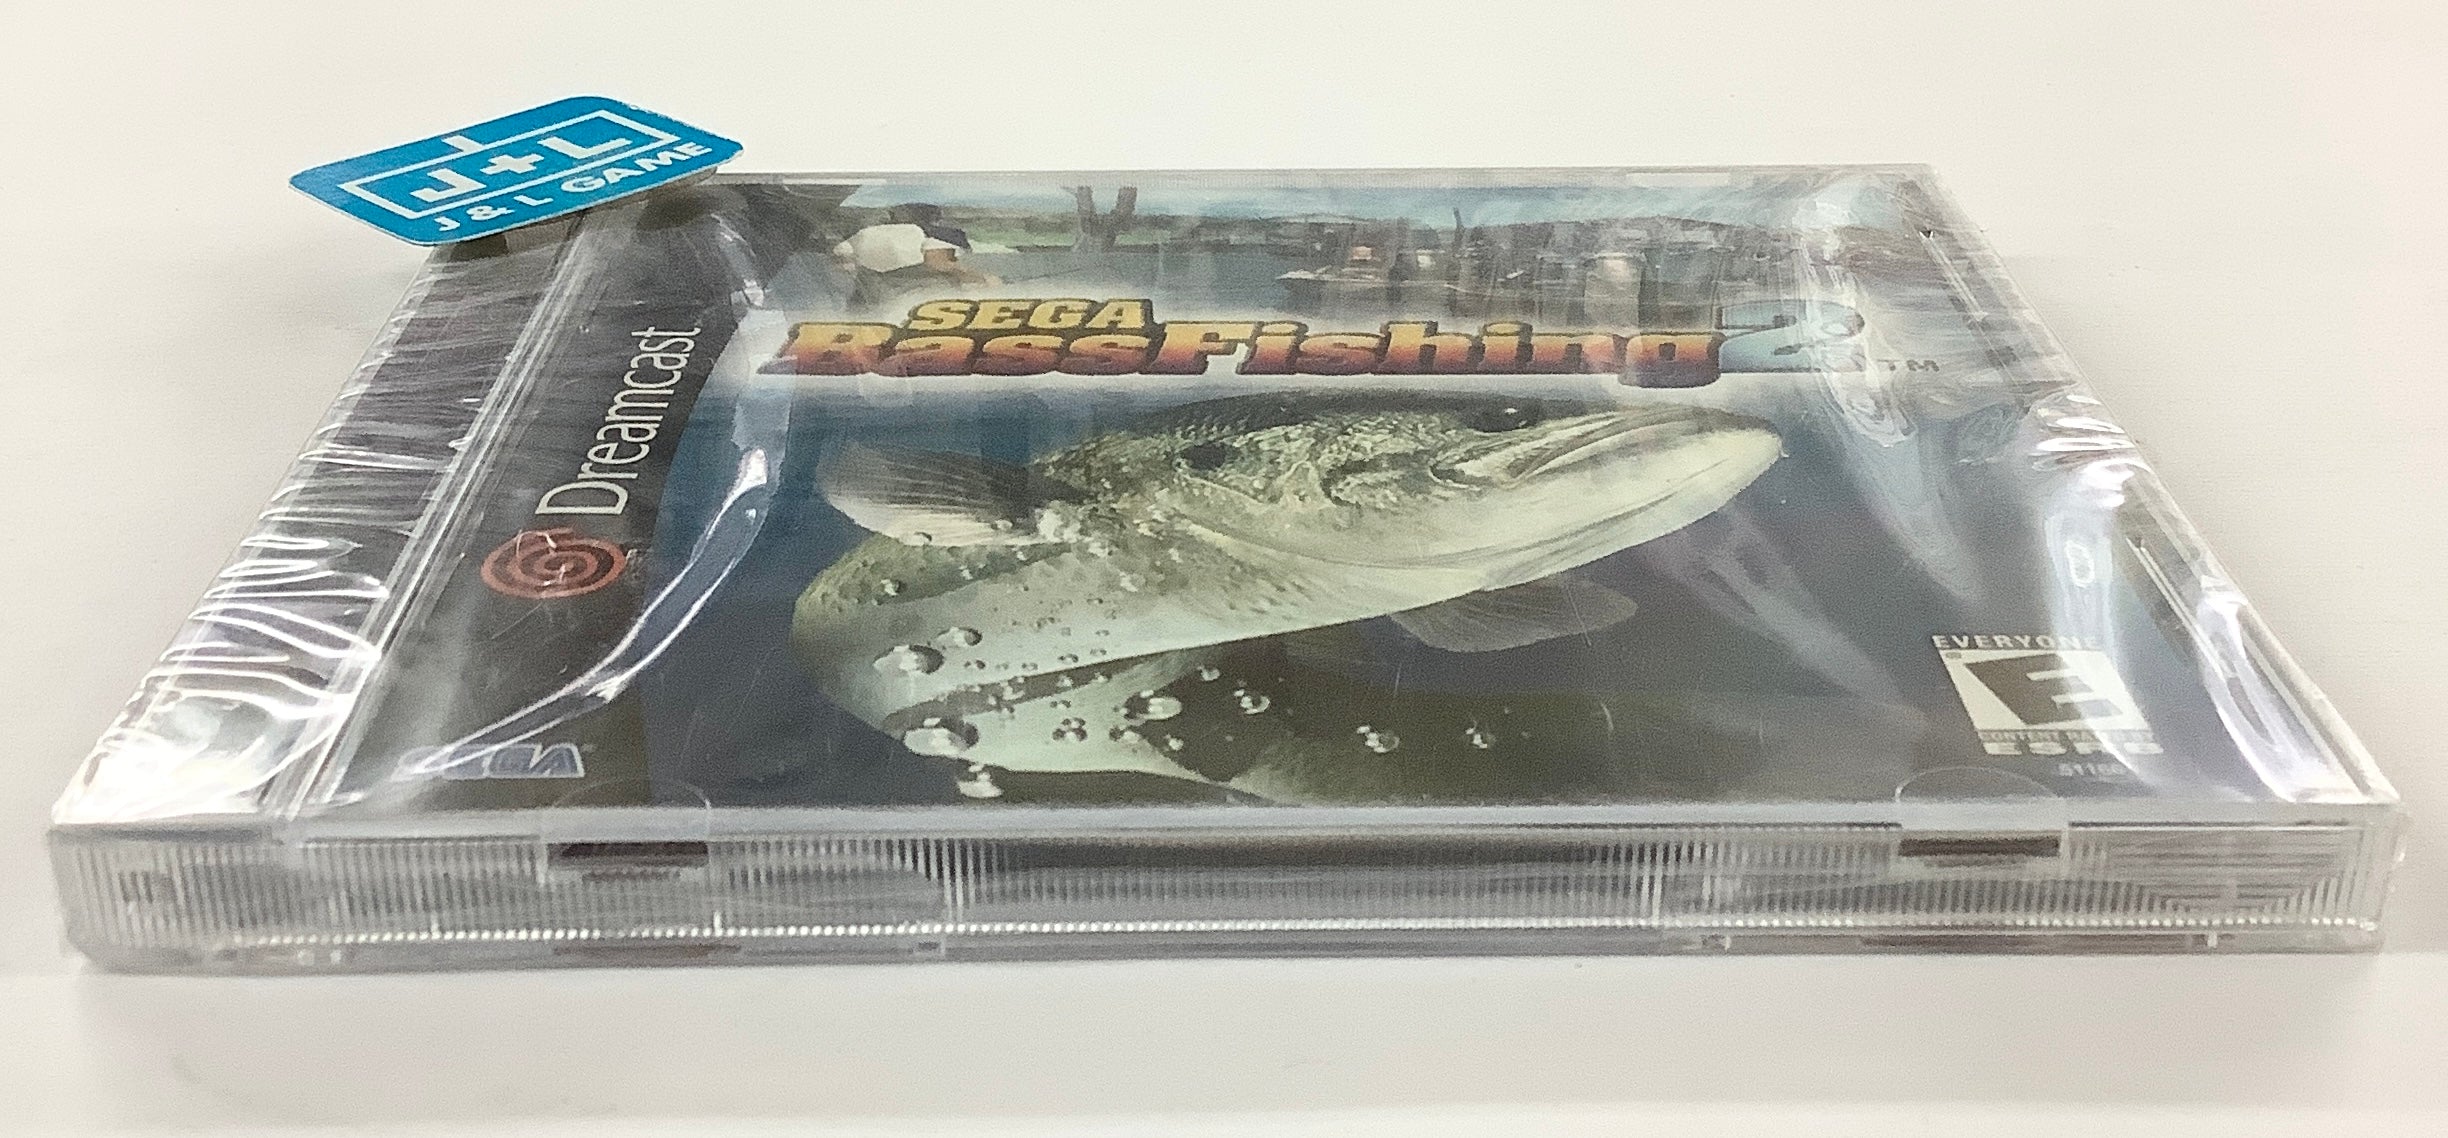 Sega Bass Fishing 2 - (DC) SEGA Dreamcast Video Games Sega   